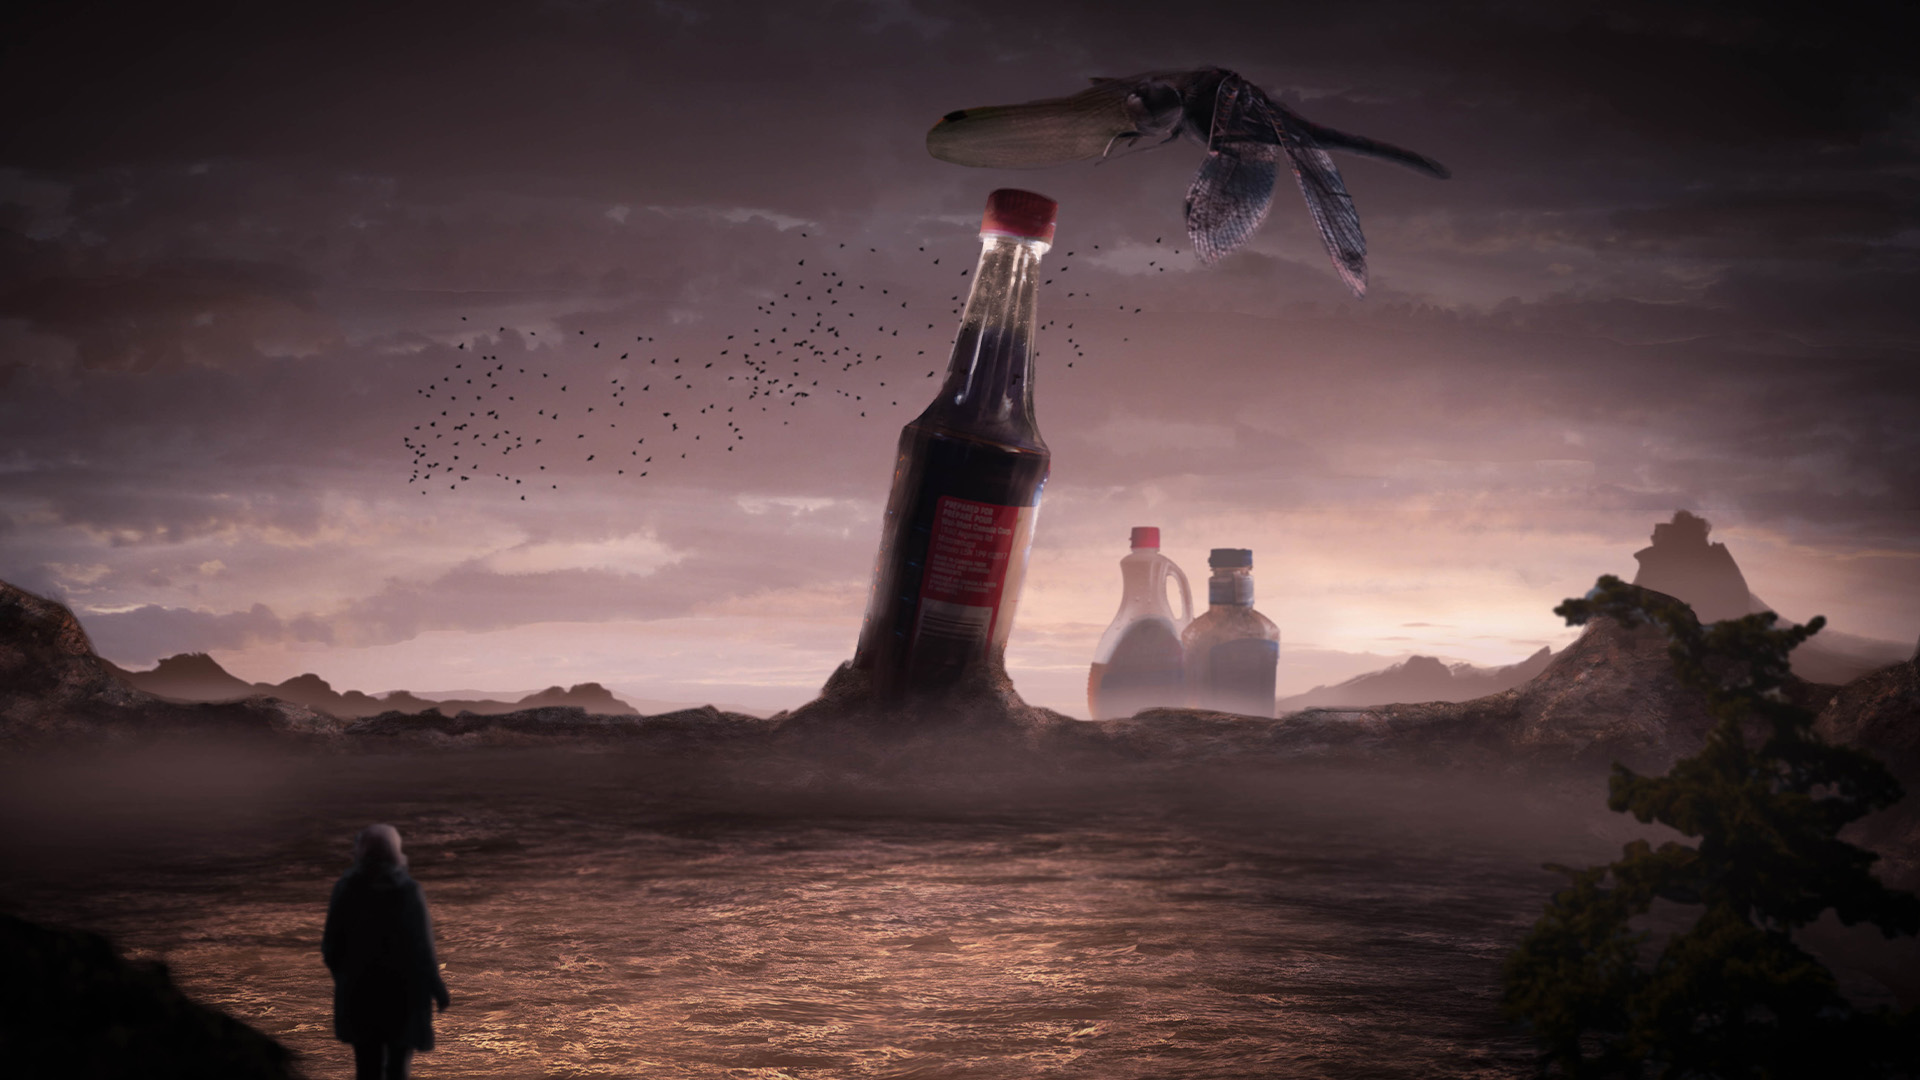 A giant dragonfly settles on a giant coke bottle.